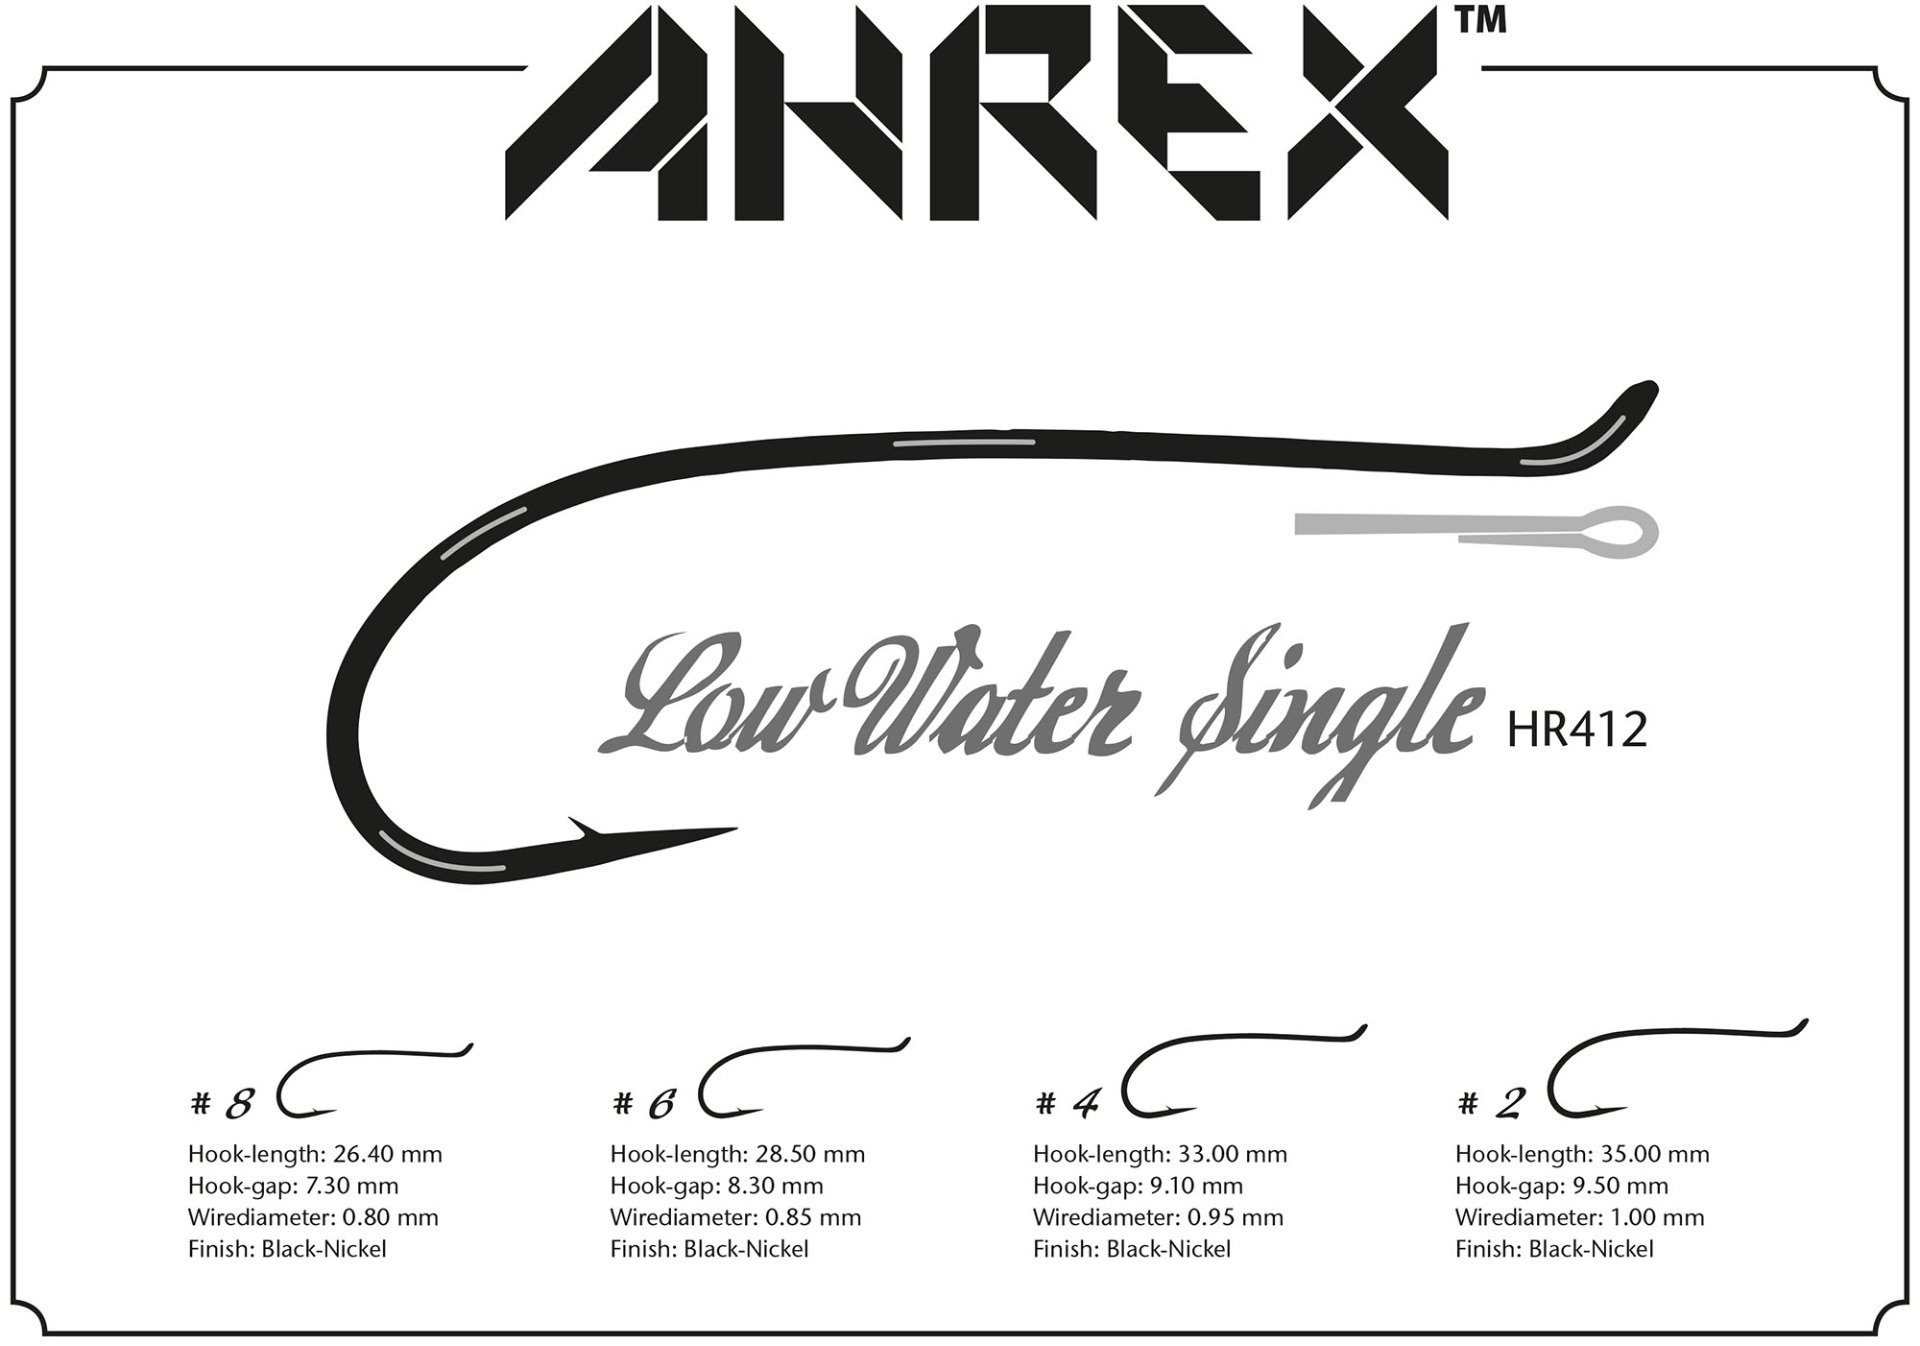 Ahrex Salmon Low Water Single #4